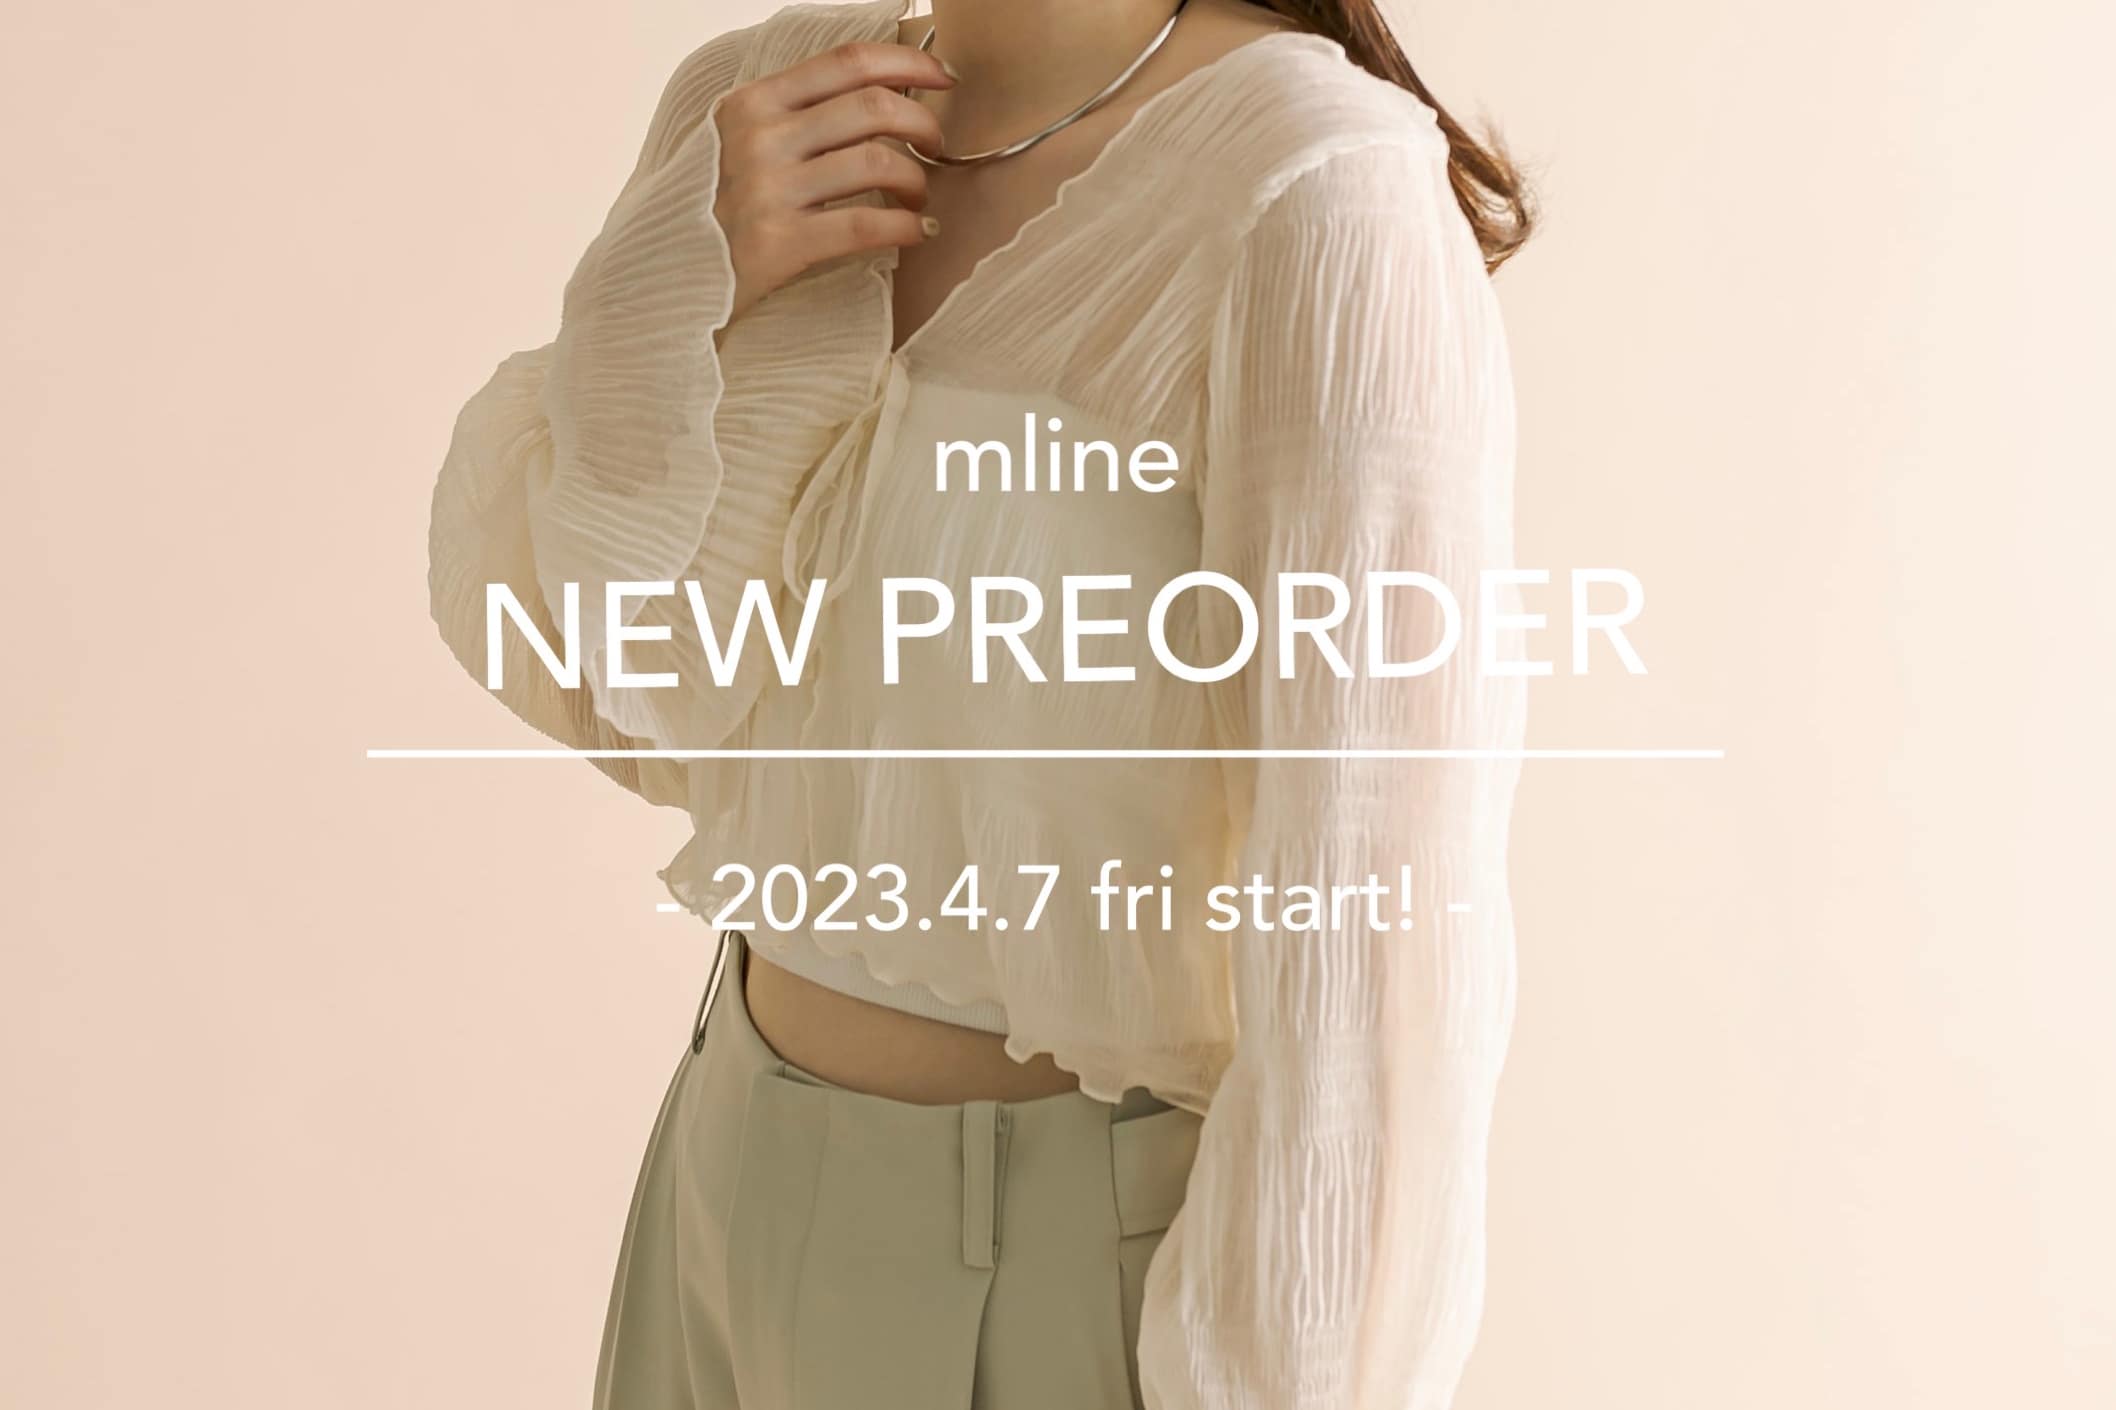 mystic 【mline】NEW PREORDER START!